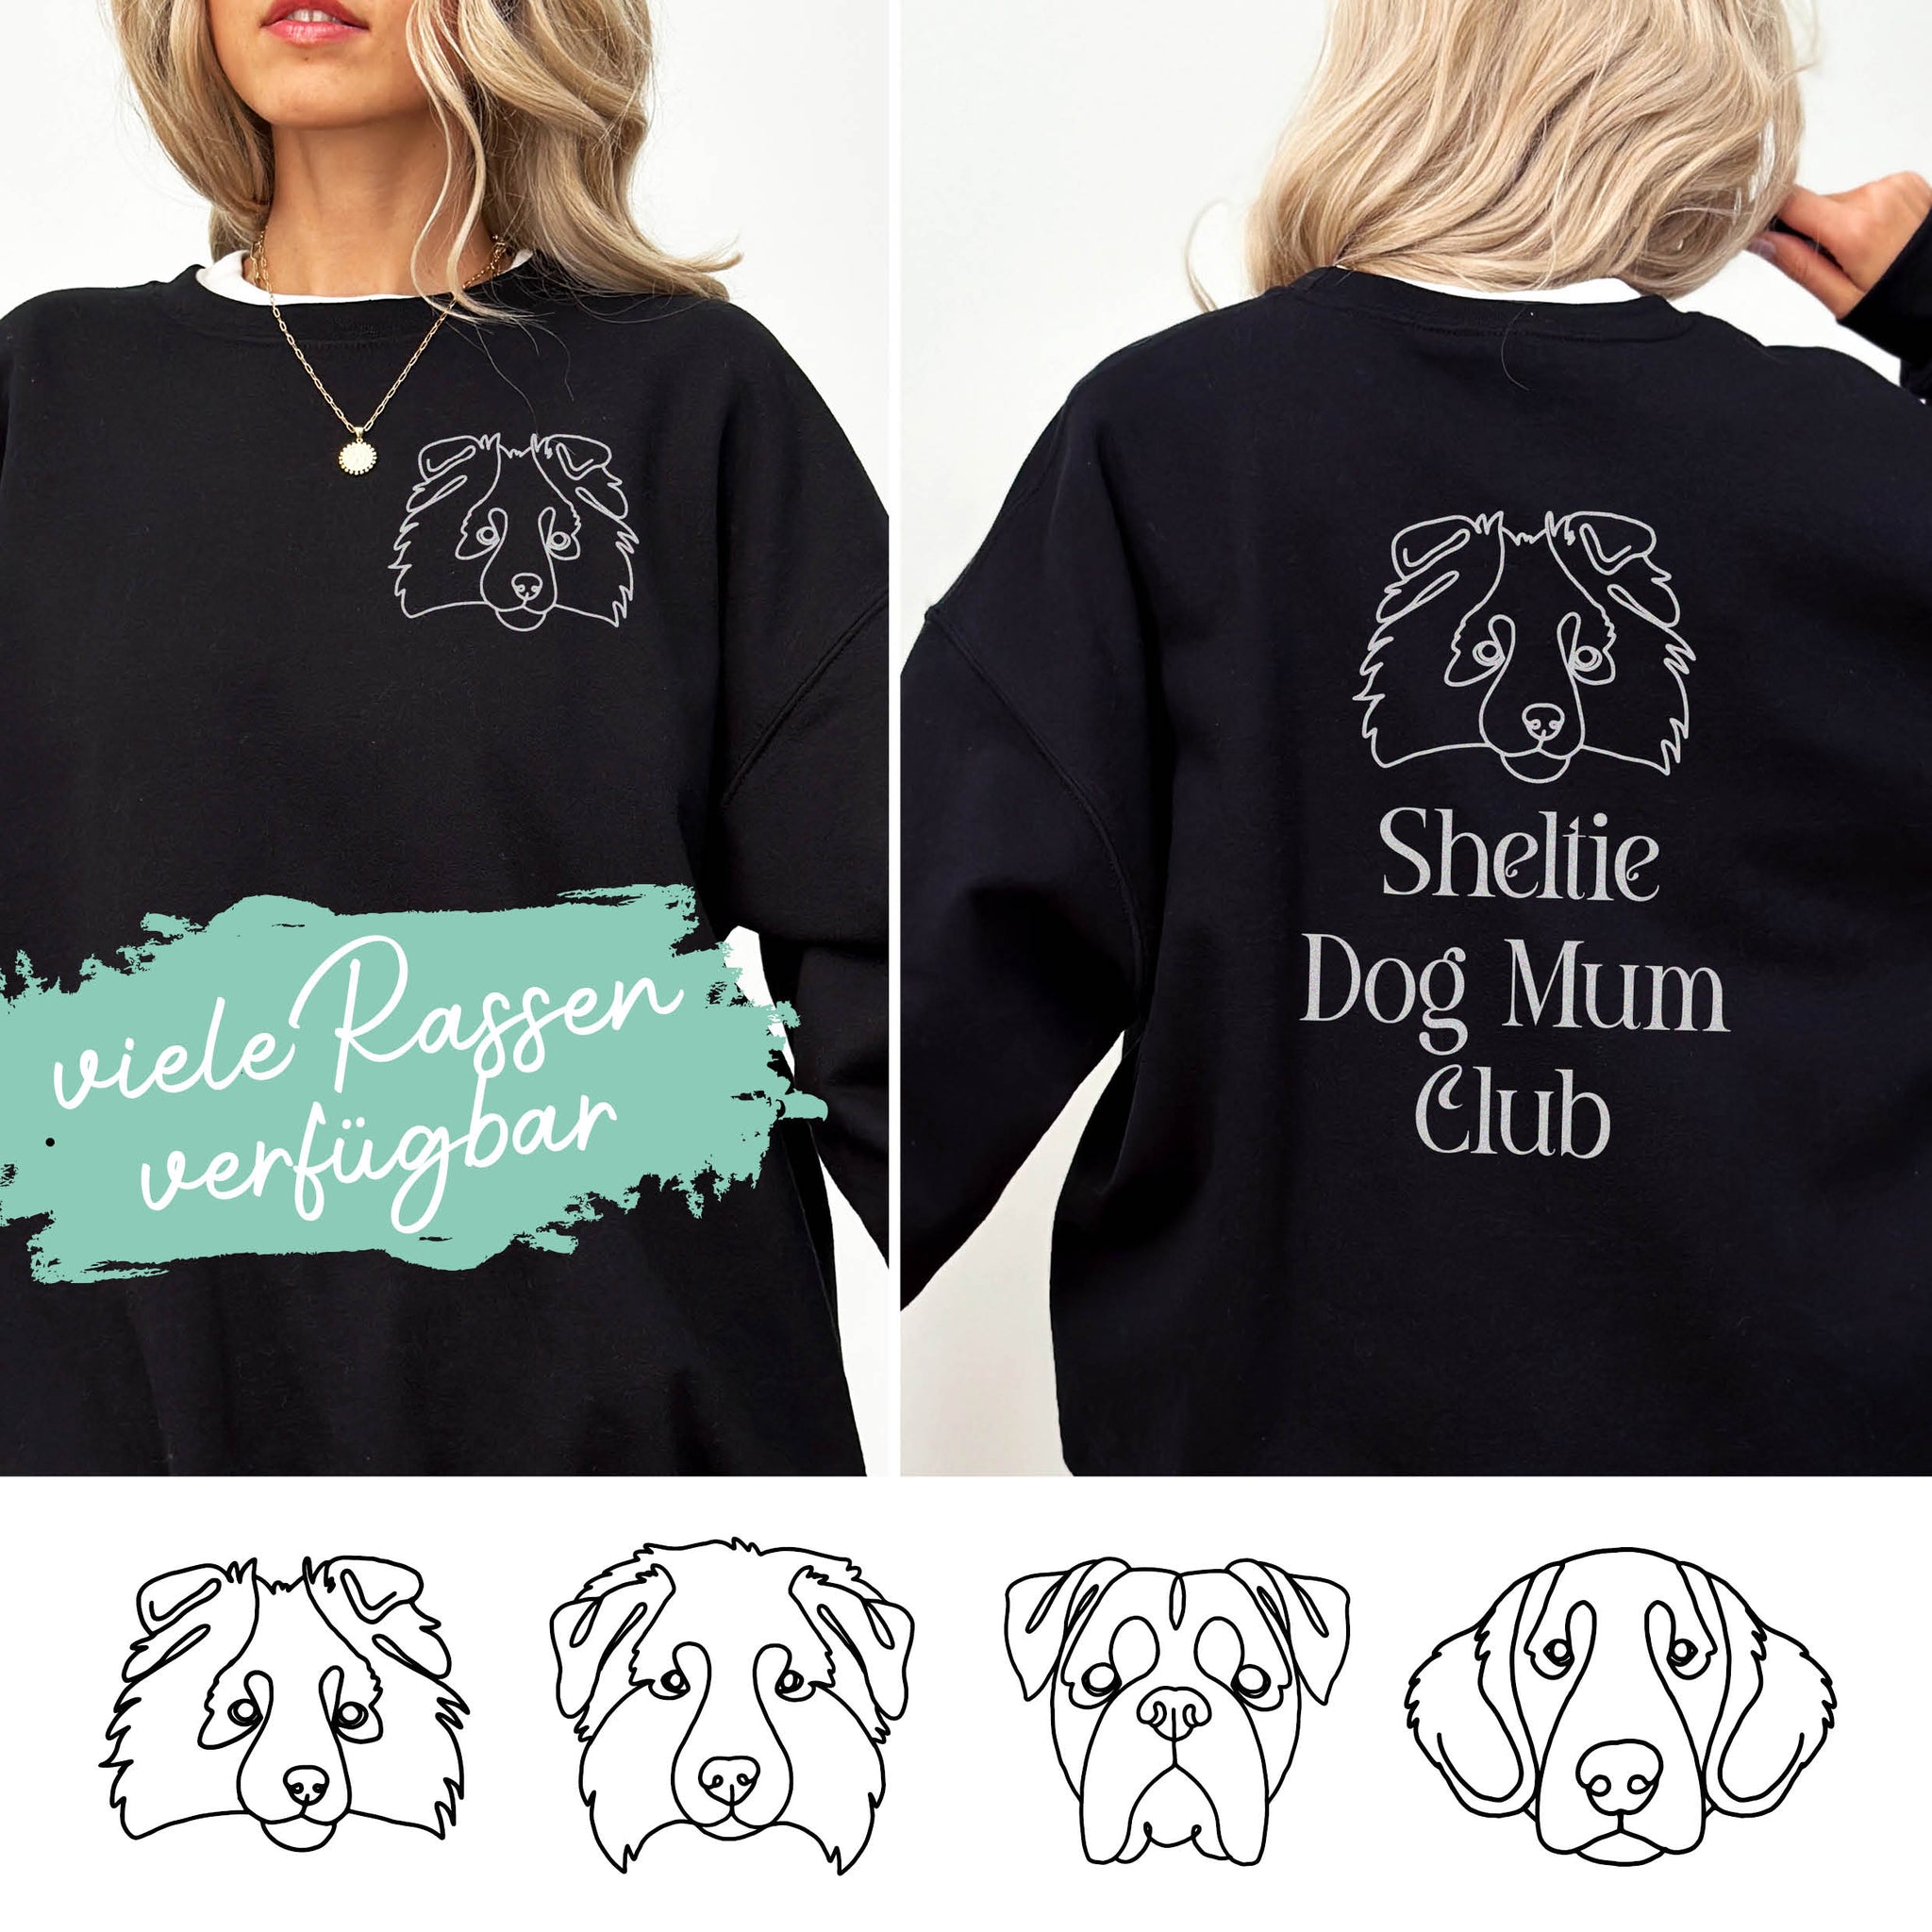 Sweatshirt Black - Dog Mum Club (breed)